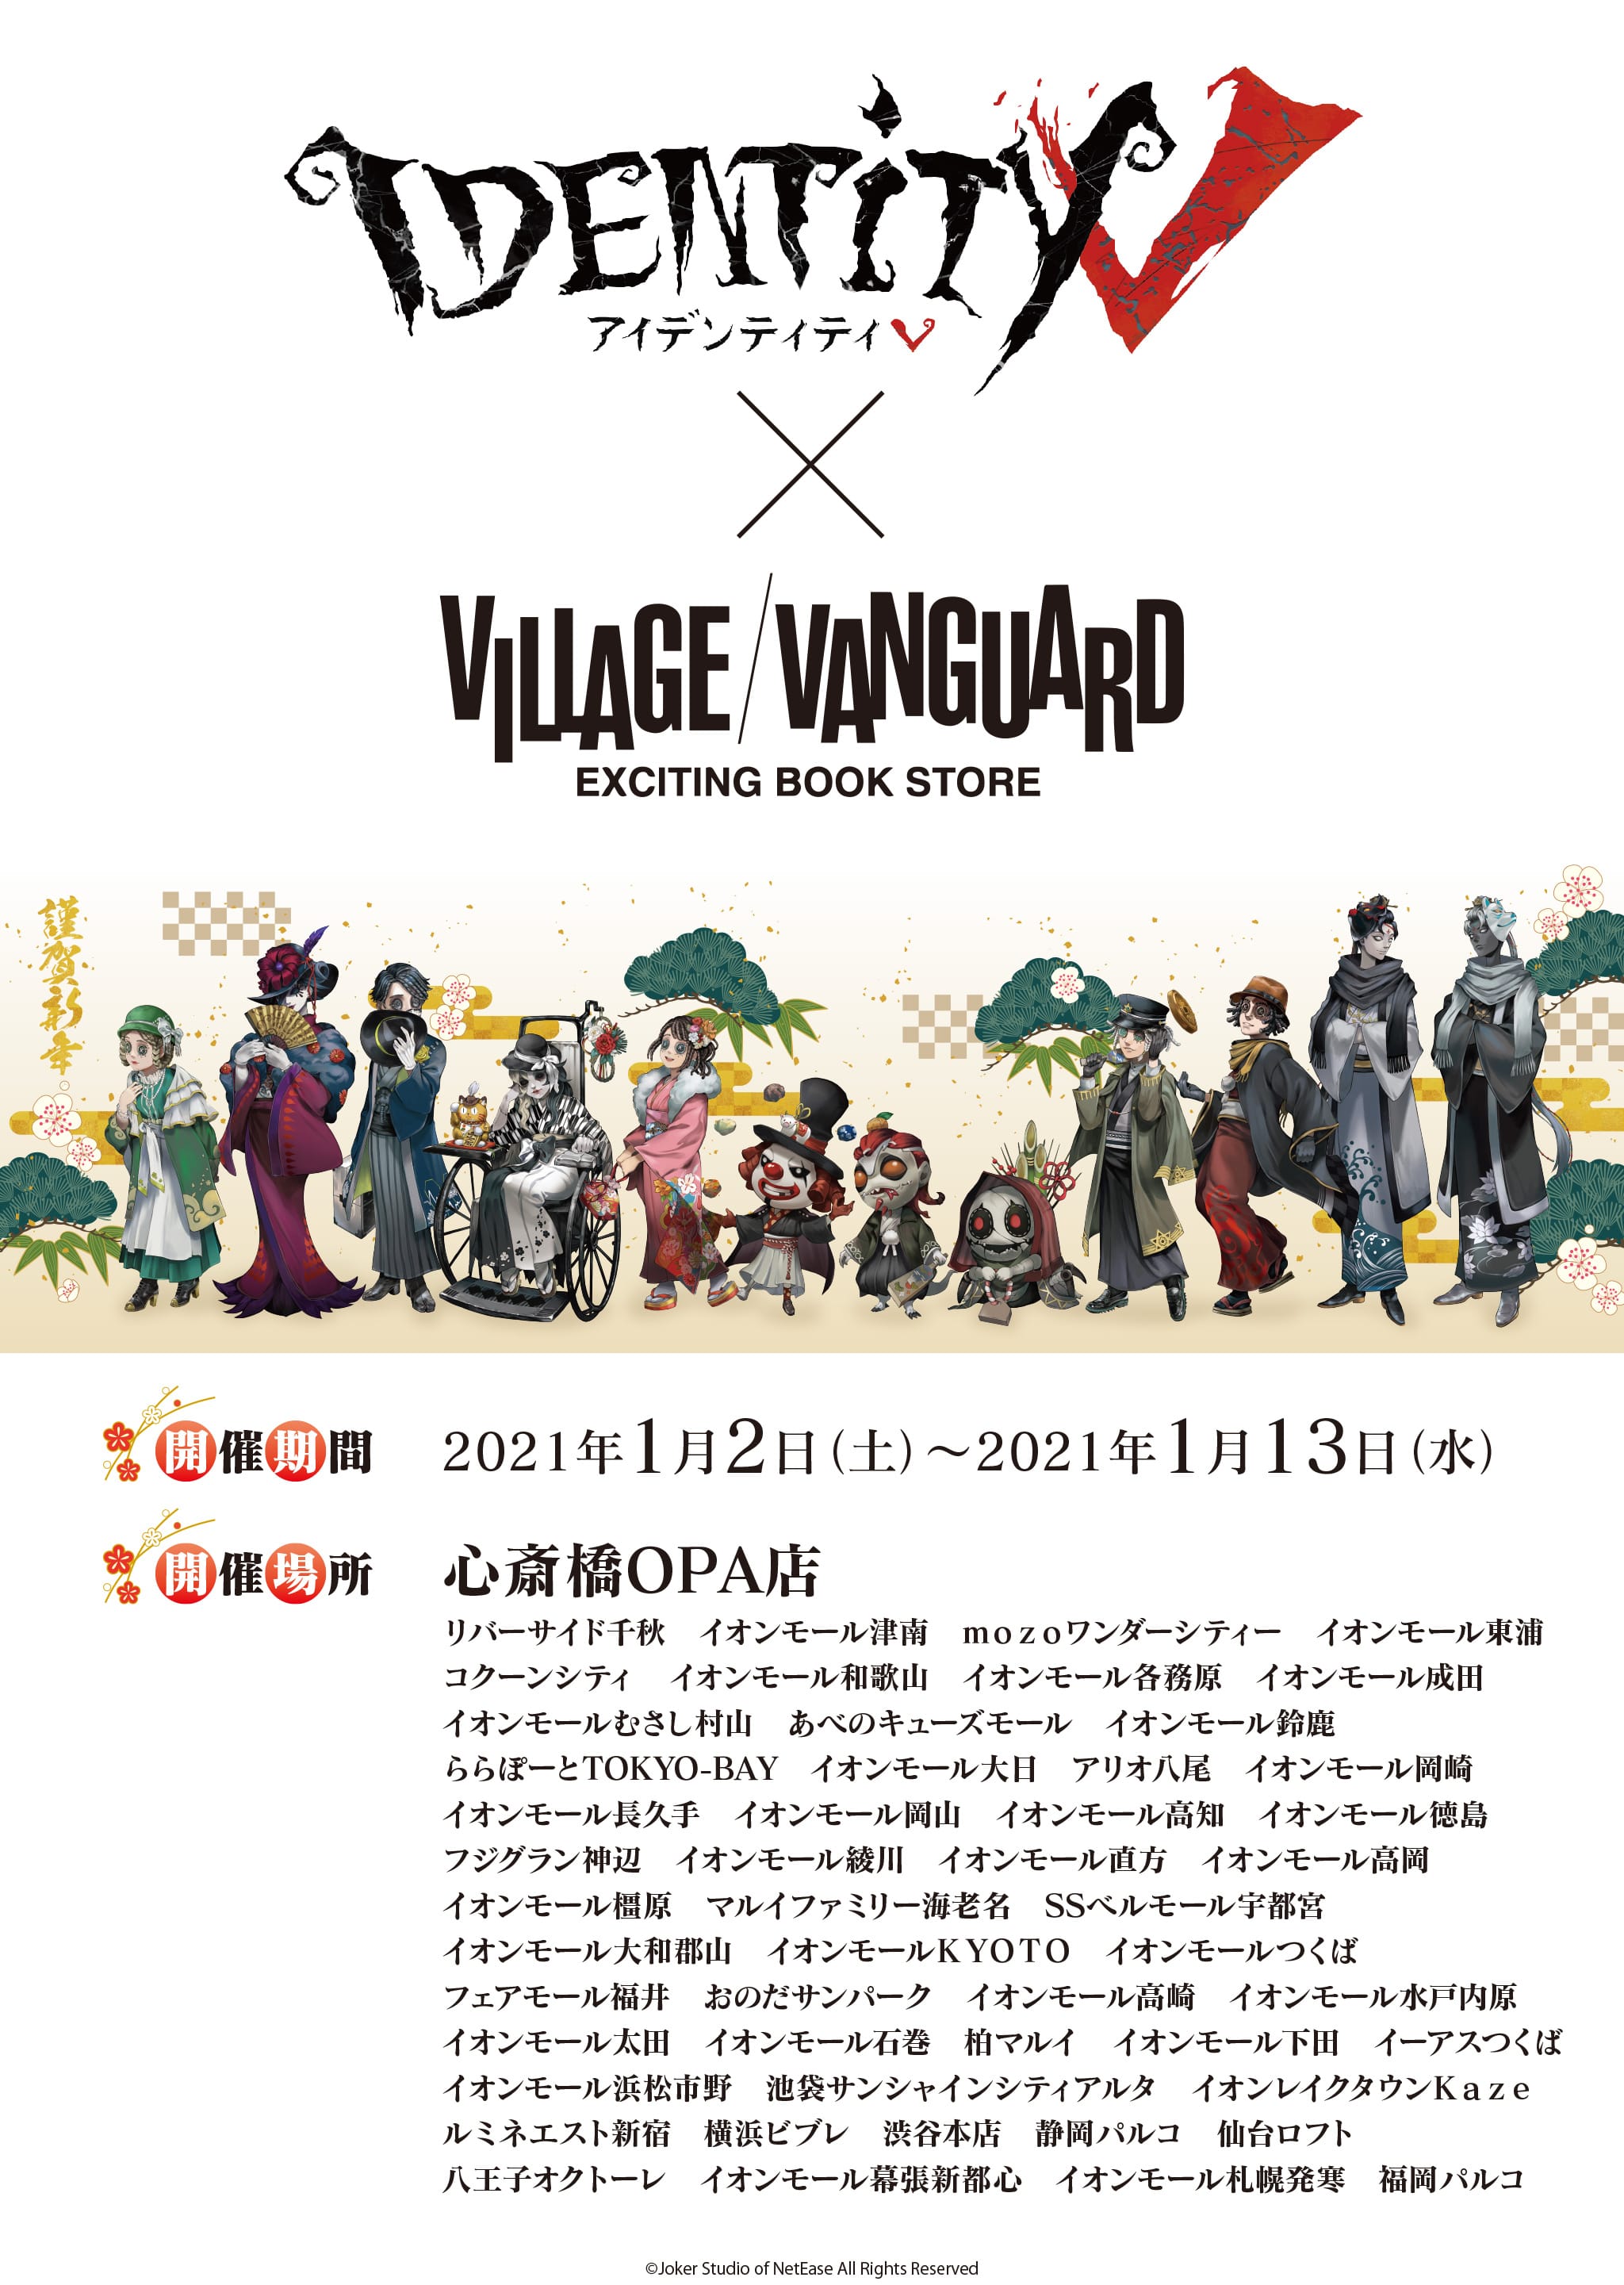 IdentityV 第五人格』初詣2021 in Village vanguard